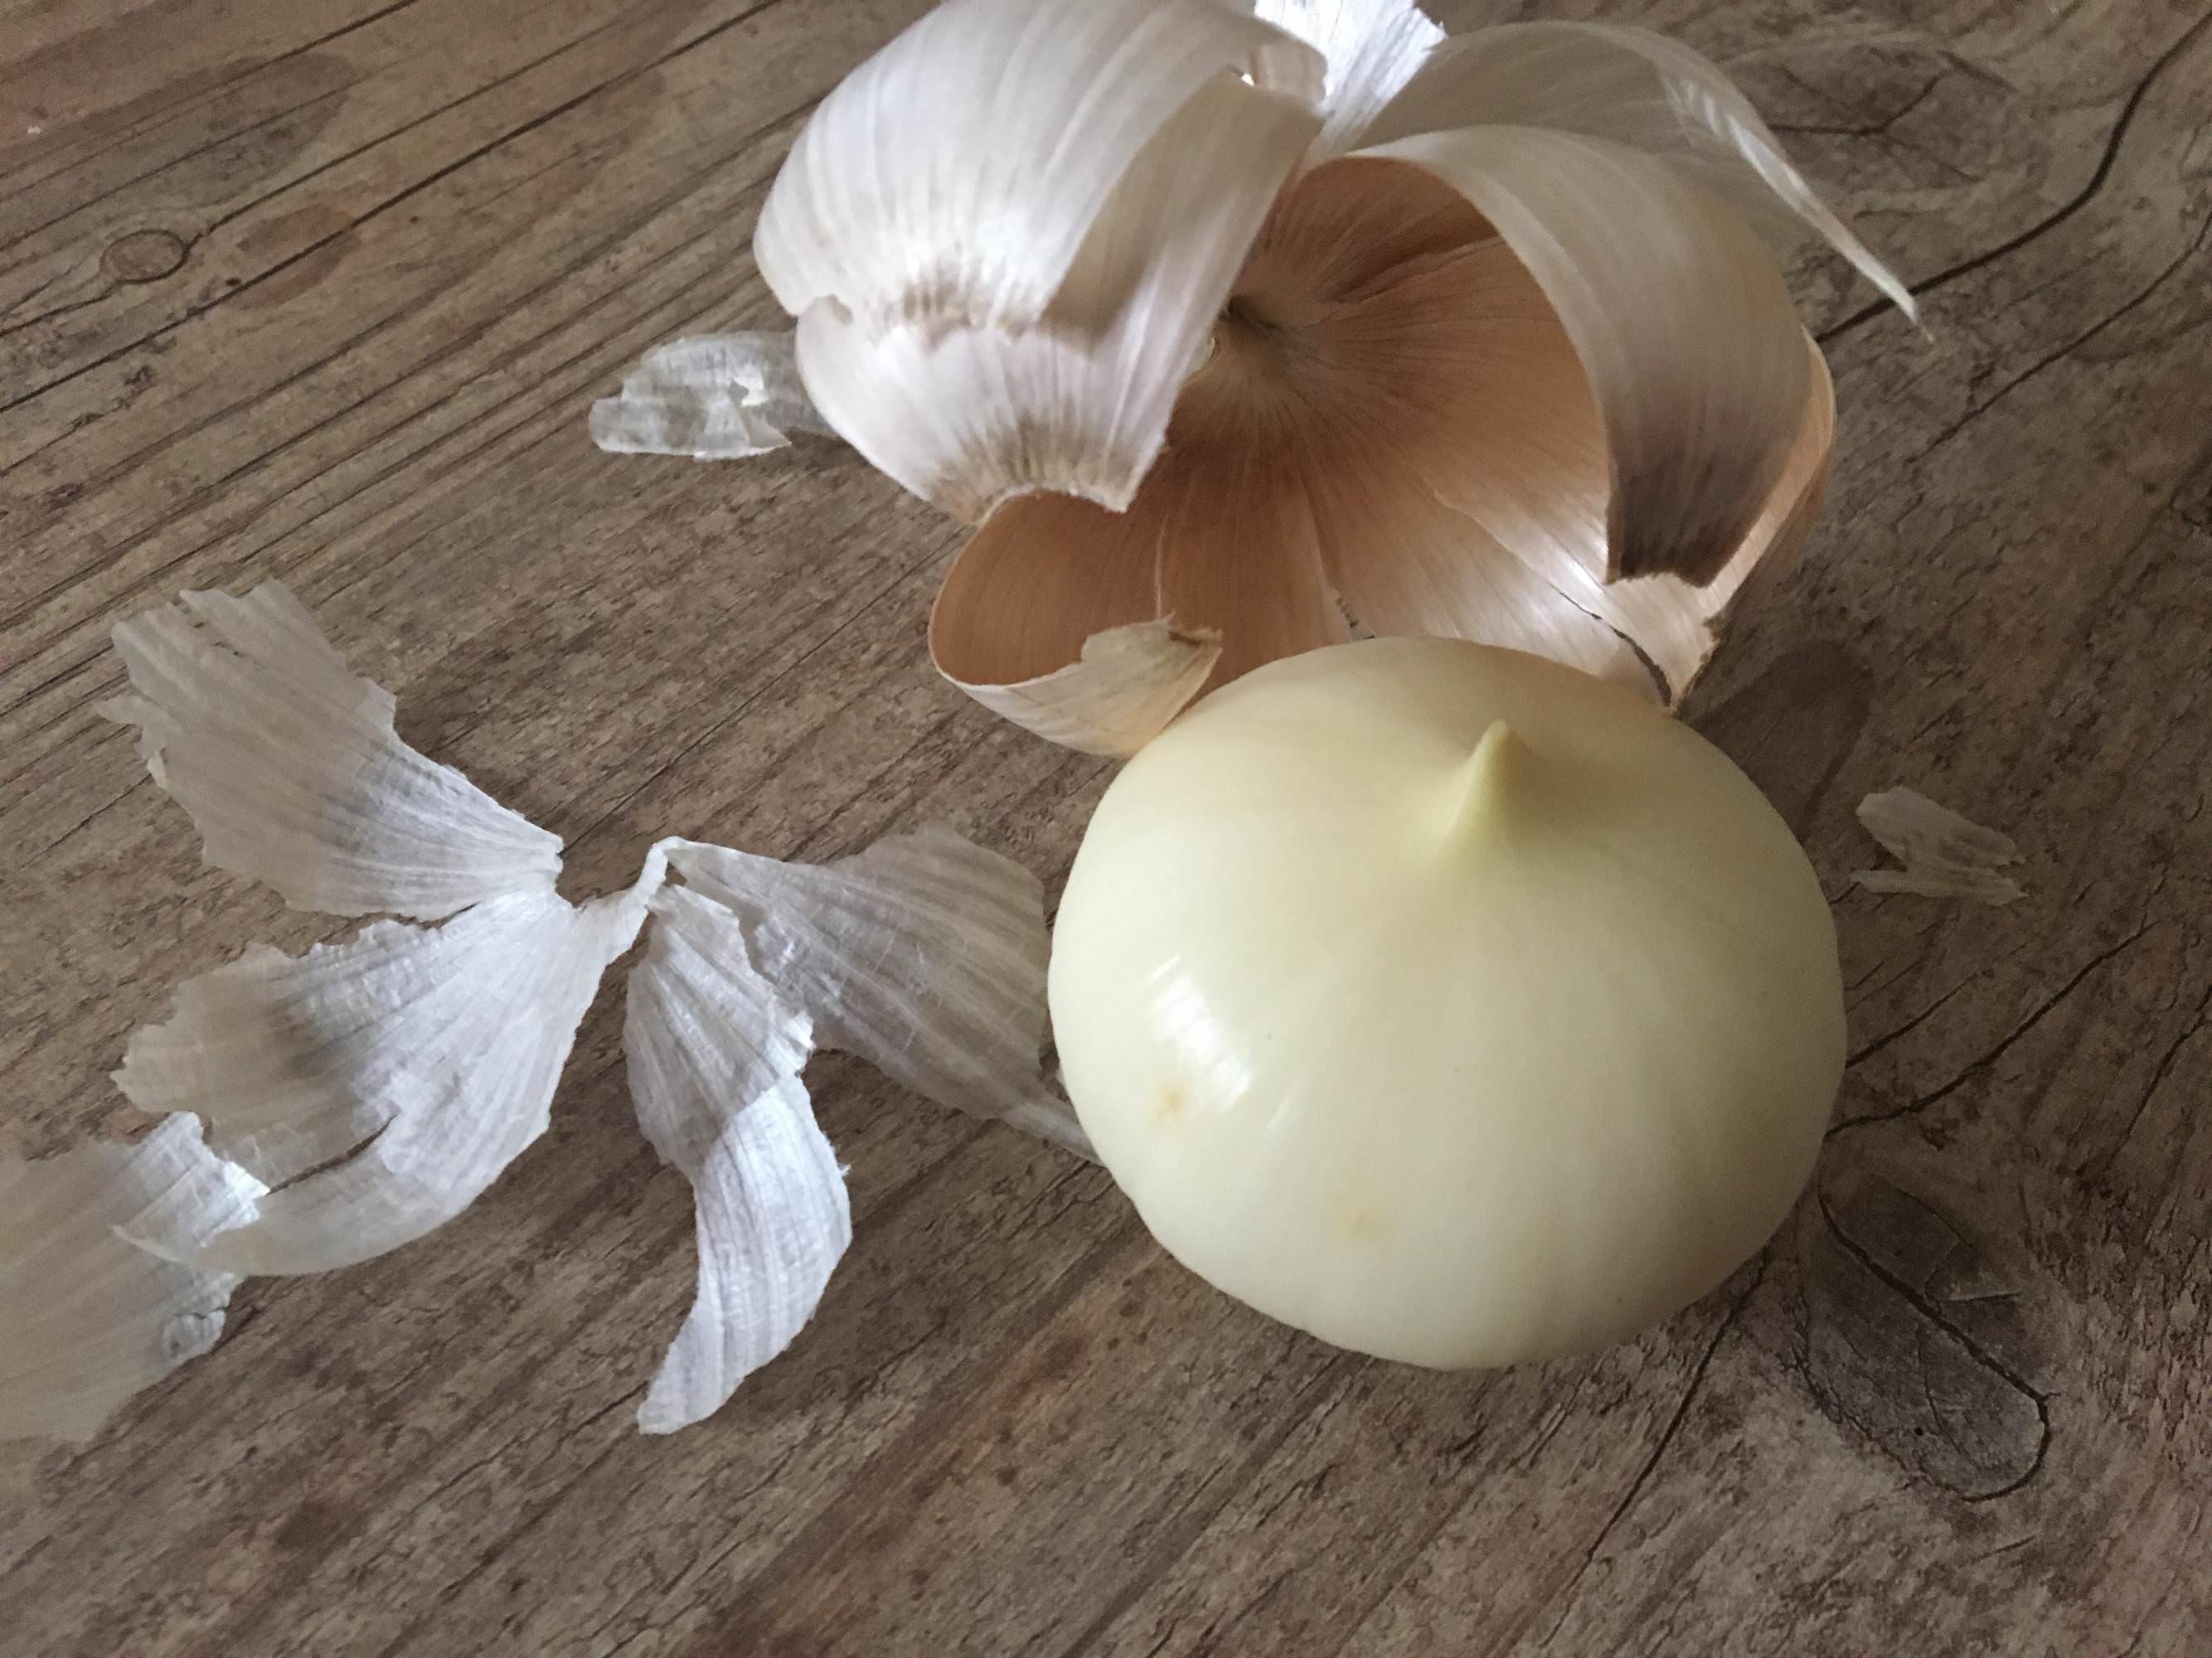 A garlic bulb that&#x27;s one big clove